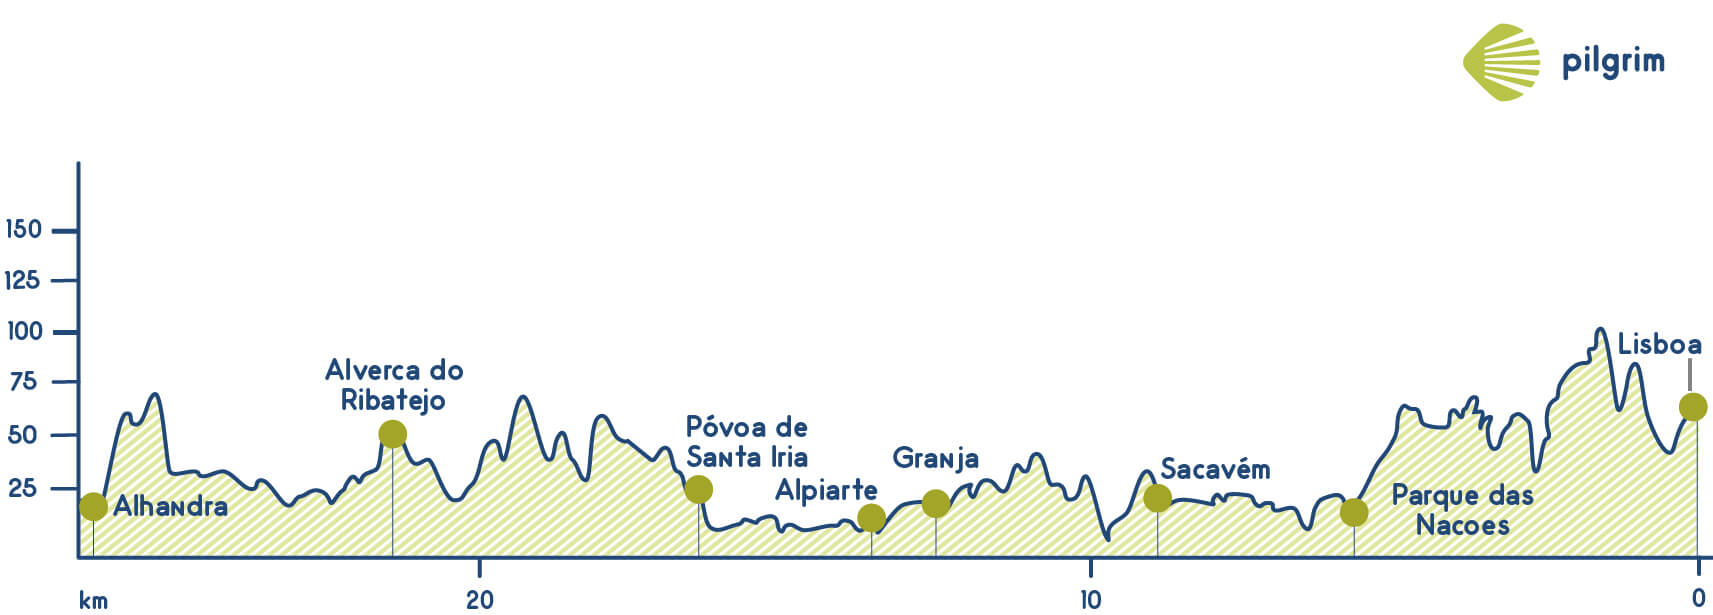 Stage 1 Camino Portugués